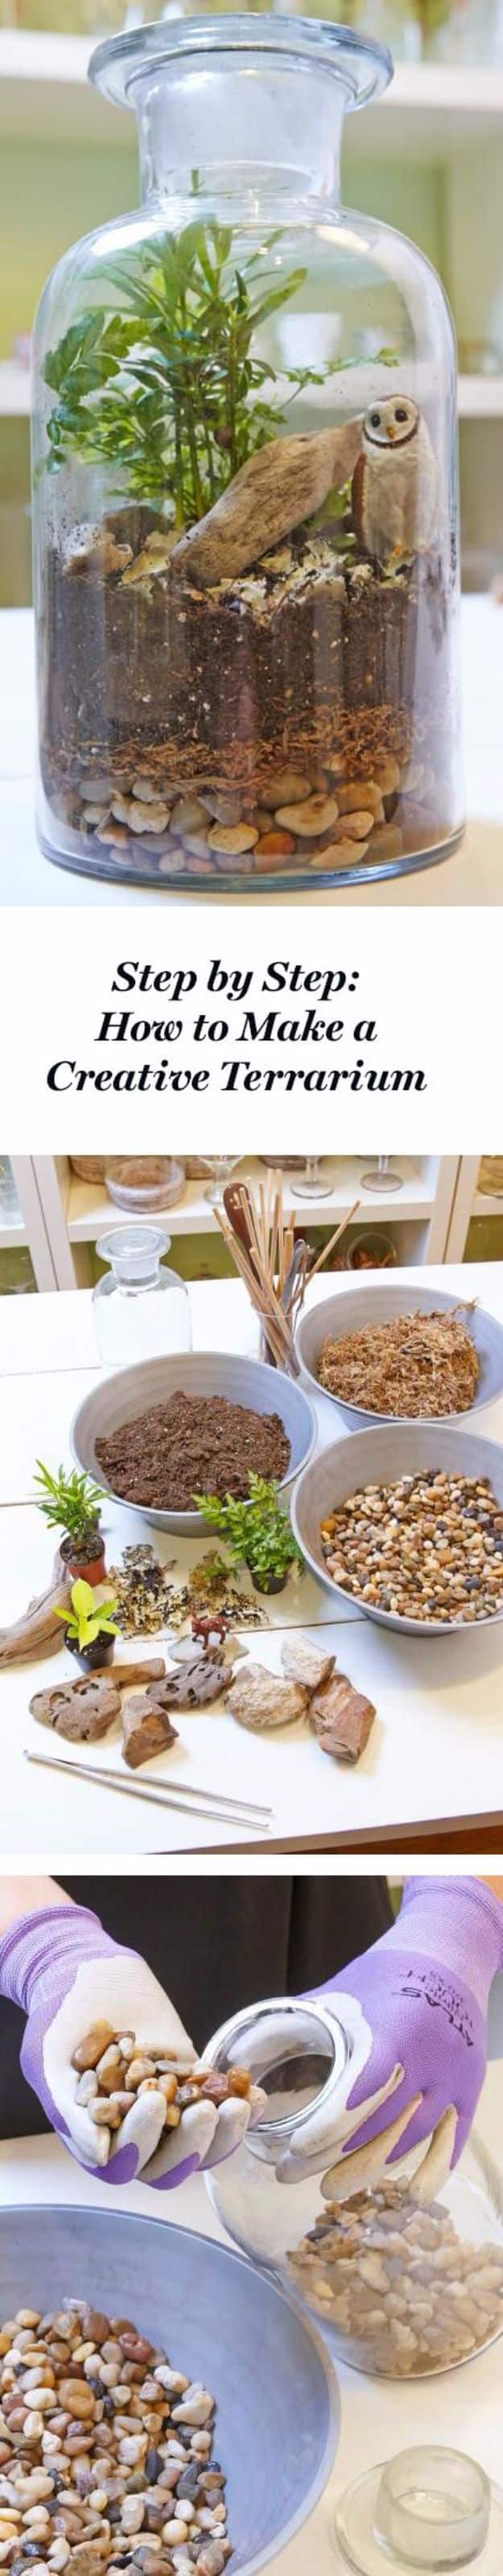 DIY Terrarium Ideas - Creative Terrarium - Cool Terrariums and Crafts With Mason Jars, Succulents, Wood, Geometric Designs and Reptile, Acquarium - Easy DIY Terrariums for Adults and Kids To Make at Home 